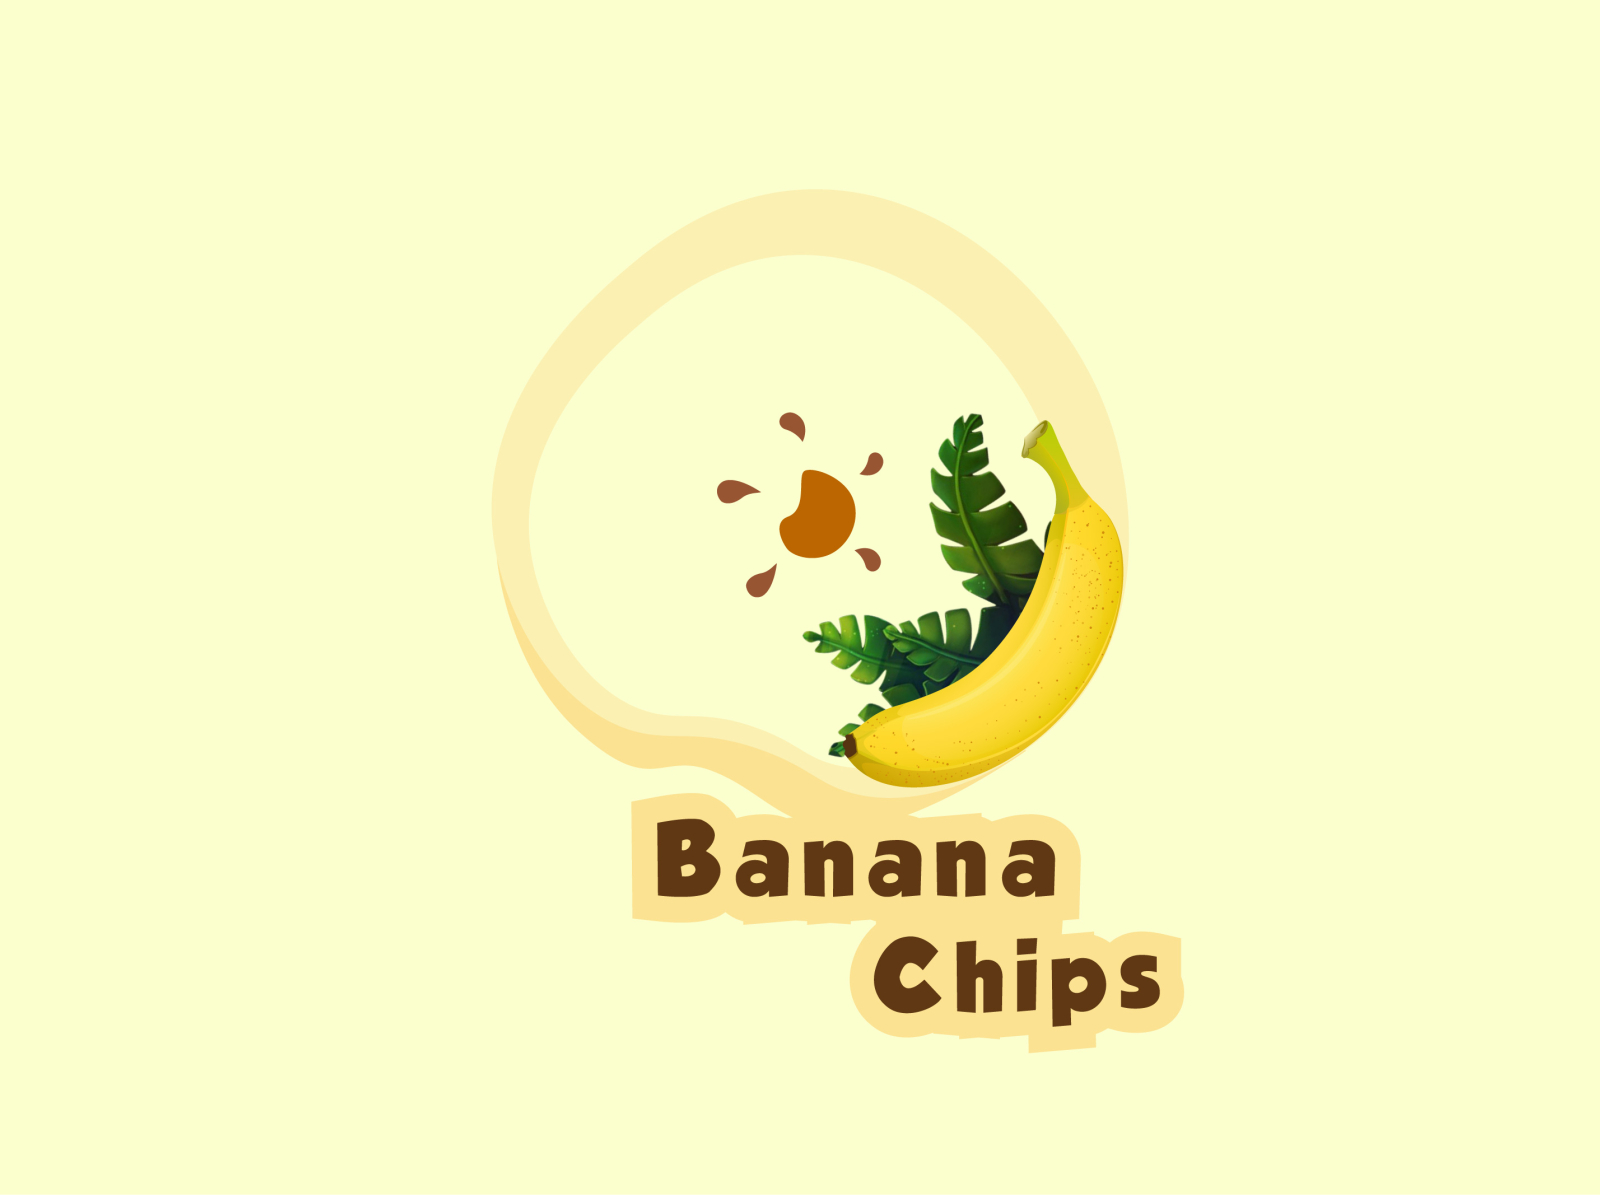 Cassava Chips Logo by Bli Made on Dribbble